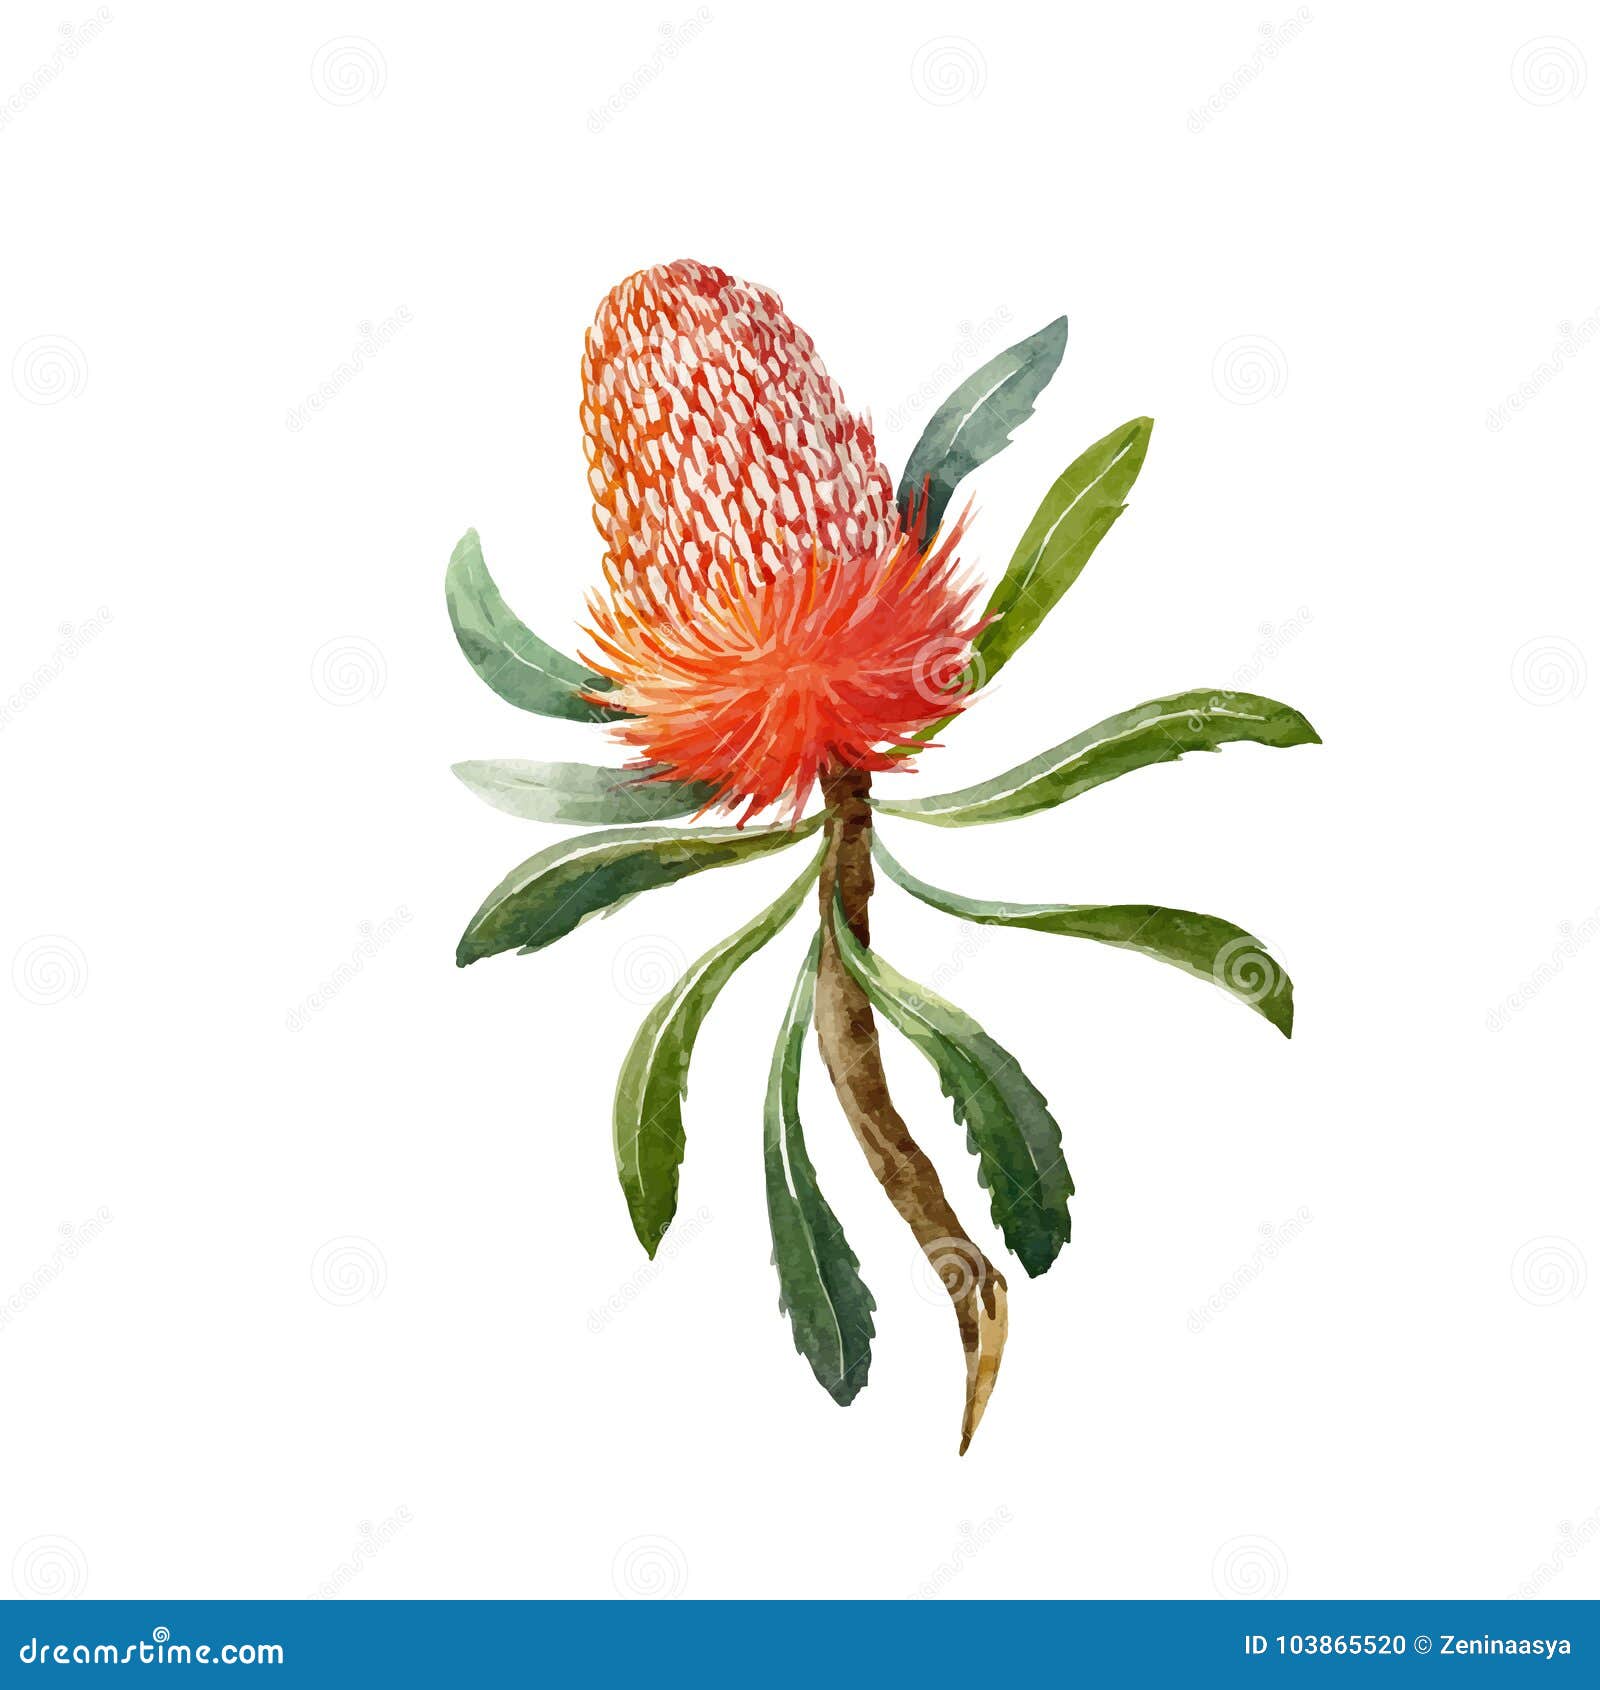 watercolor banksia  flower